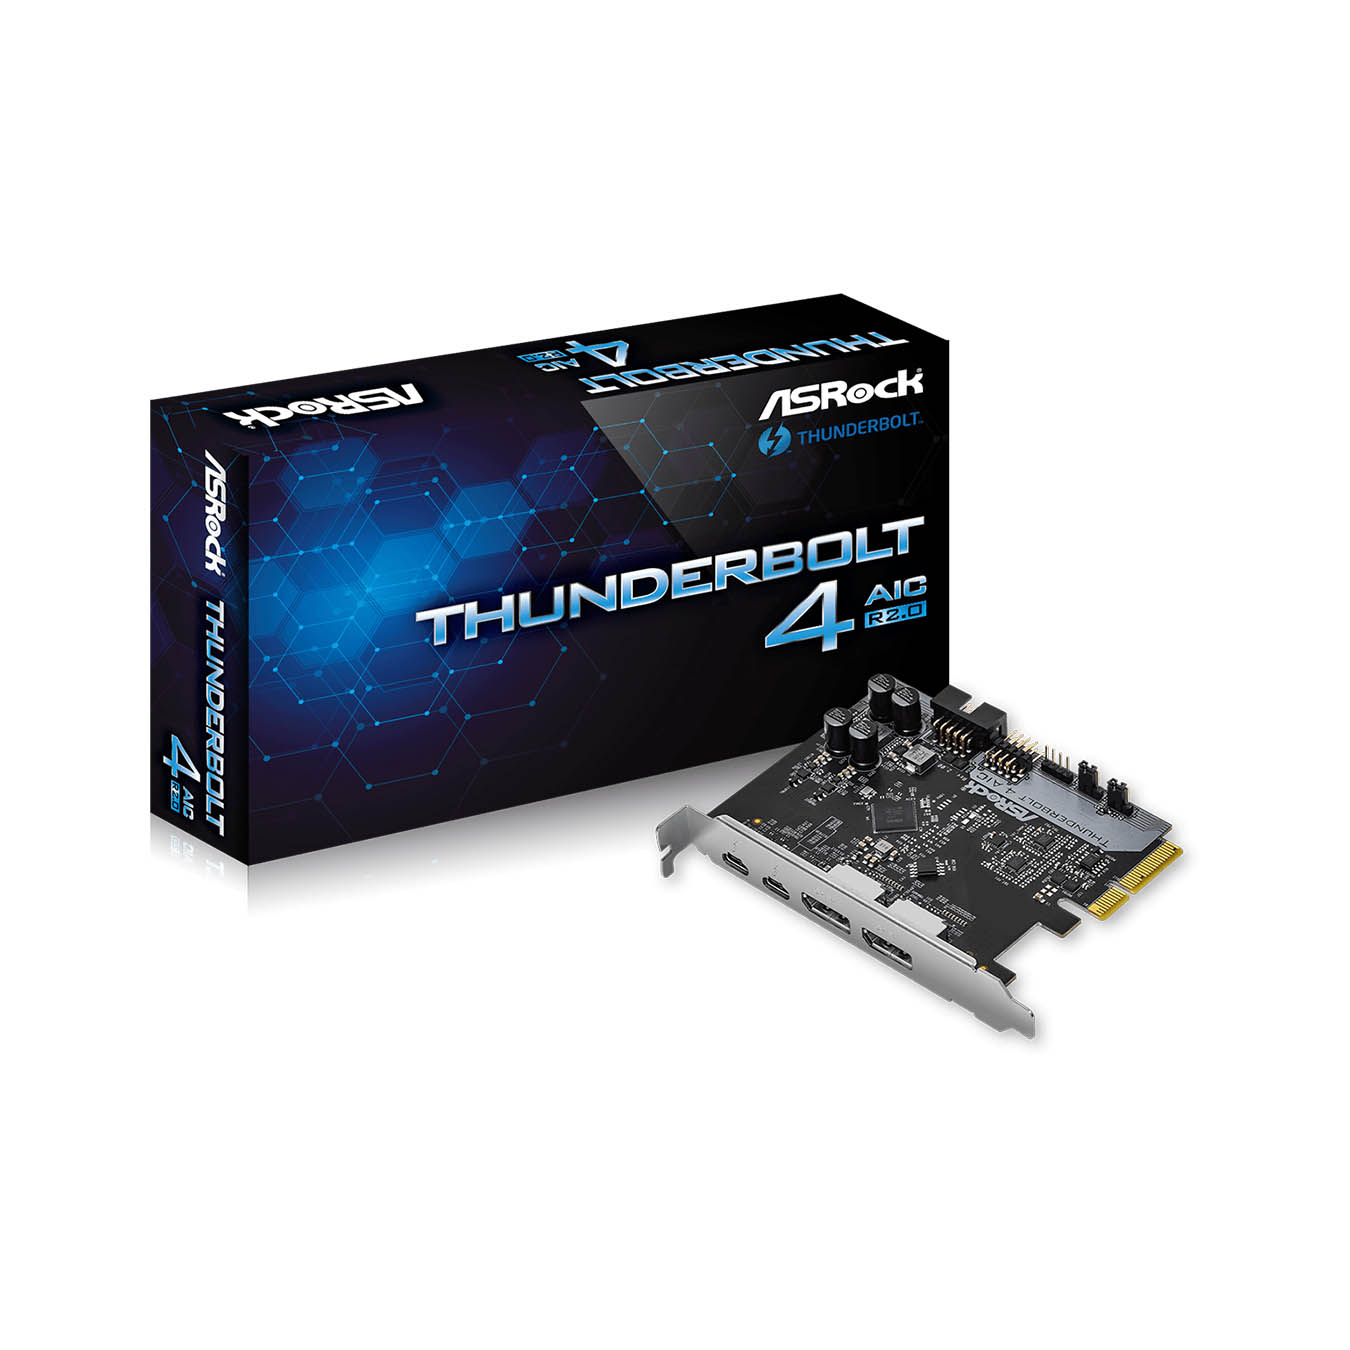 Thunderbolt 3 AIC | ASRock(アスロック) Thunderbolt™ 3 増設ボード